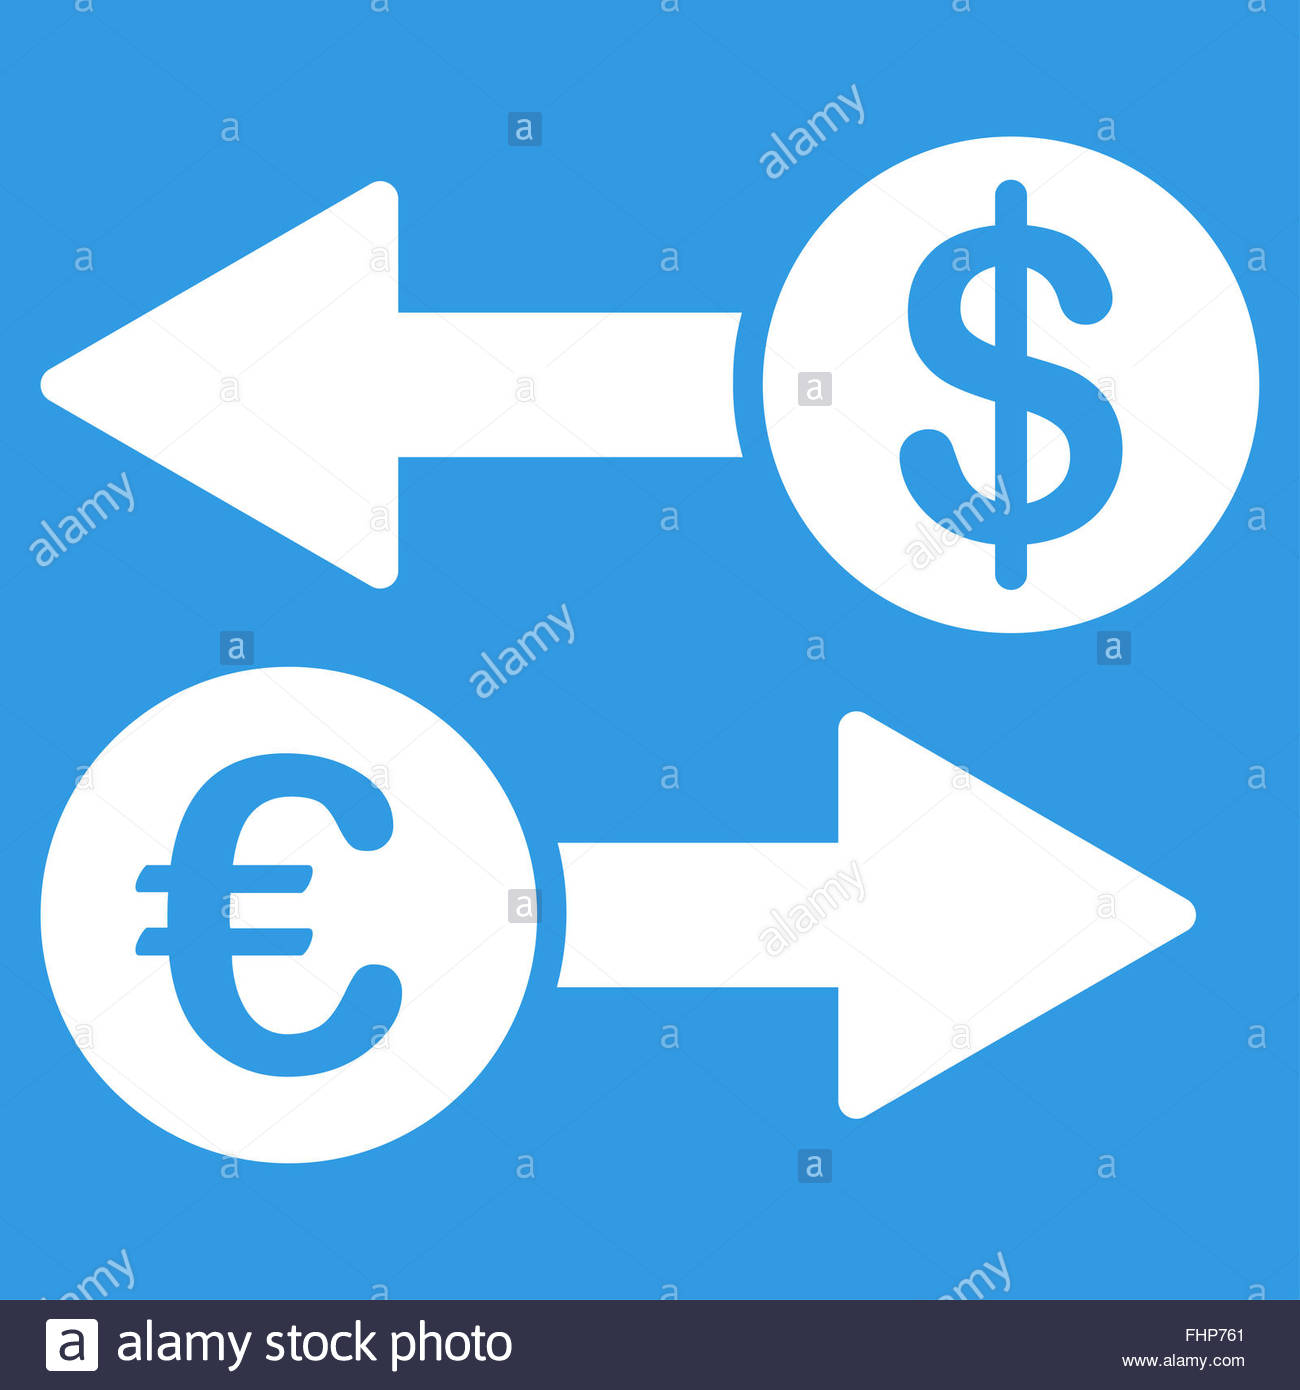 Billing, exchange, money, transaction icon | Icon search engine